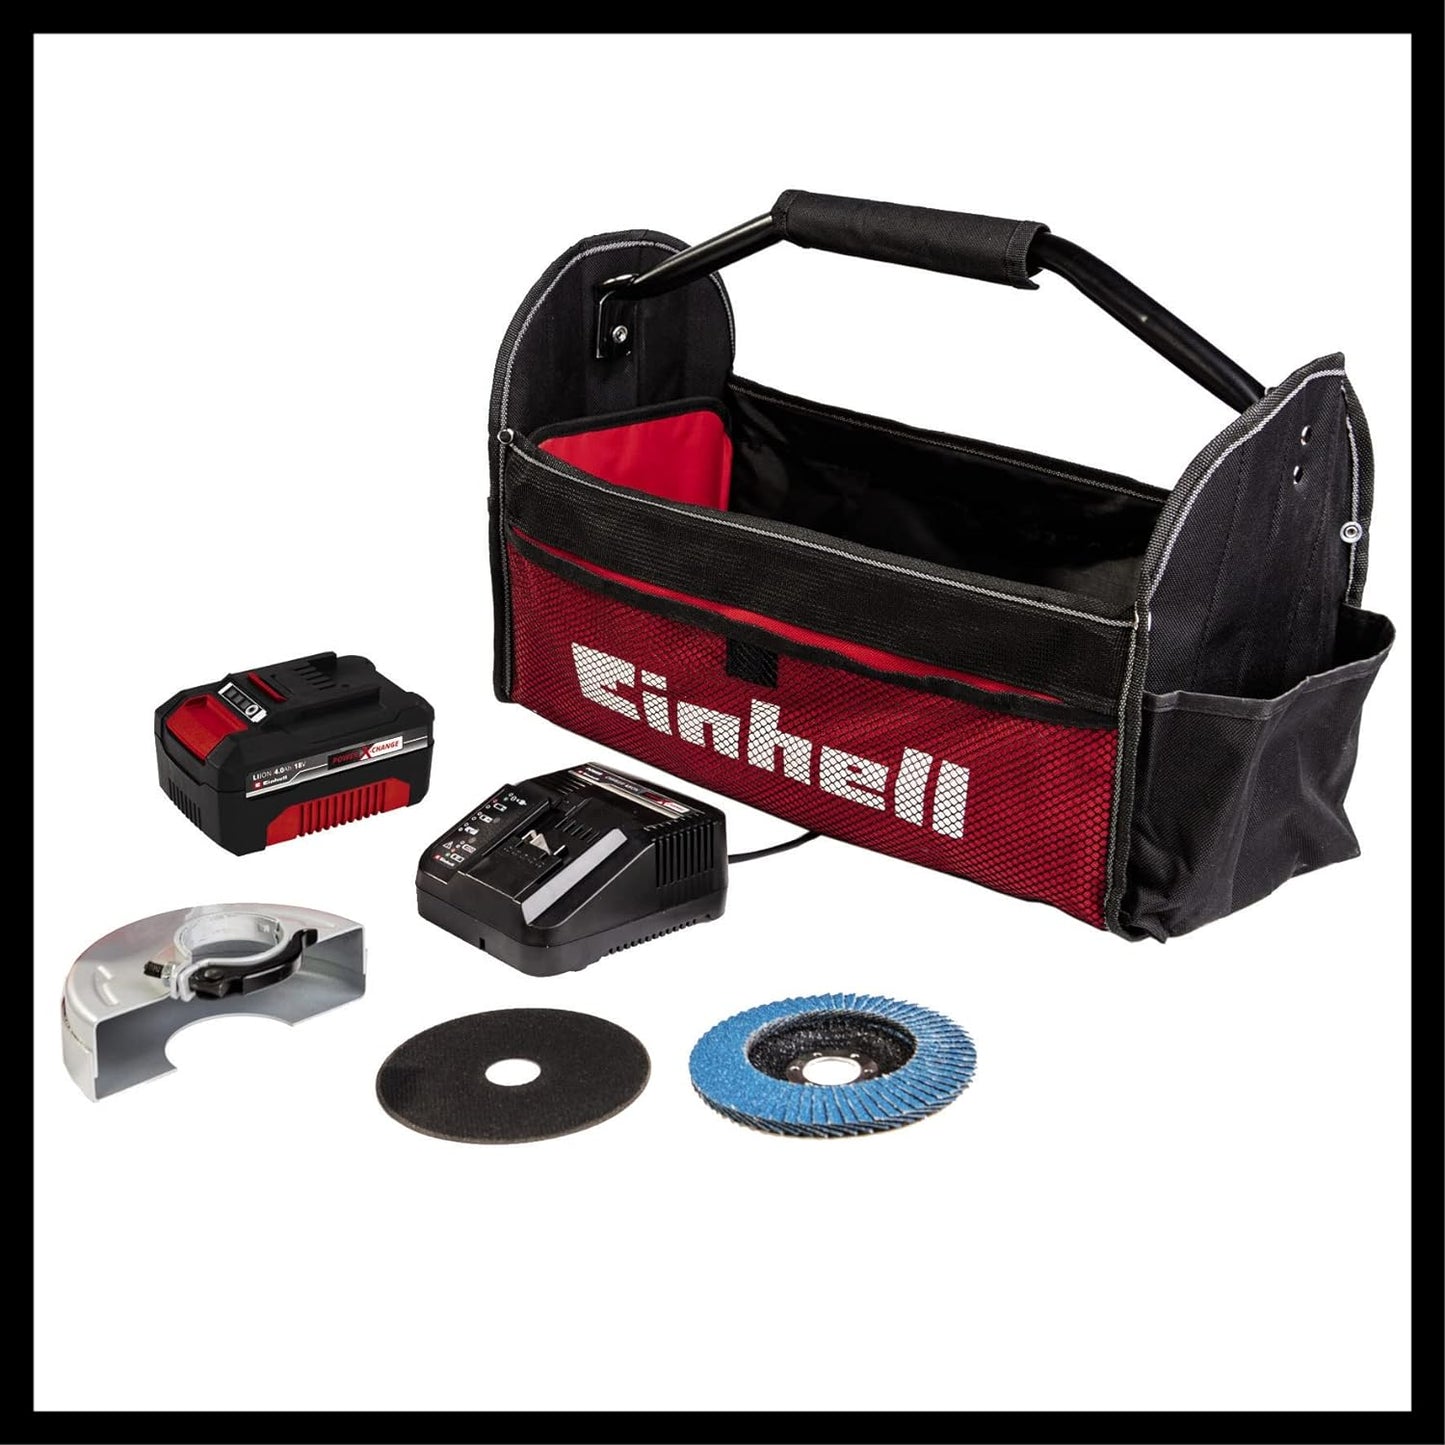 18V 115mm angle grinder kit + 4Ah battery + charger + bag + accessories Einhell TE-AG 18/115 Li kit